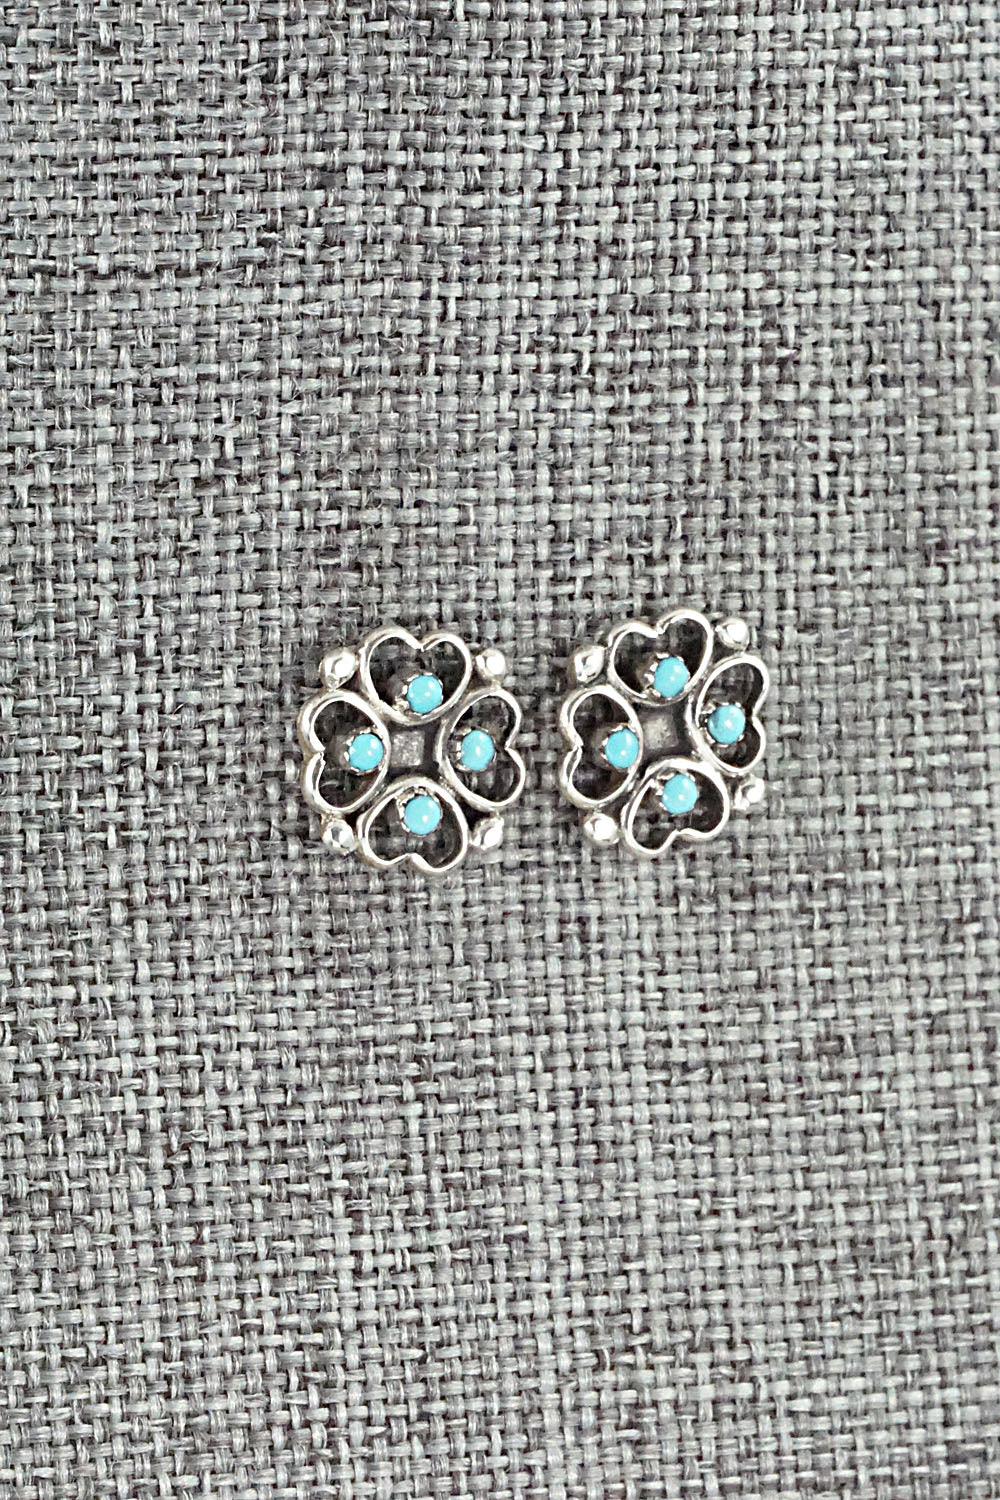 Turquoise & Sterling Silver Earrings - Dorthy Natachu